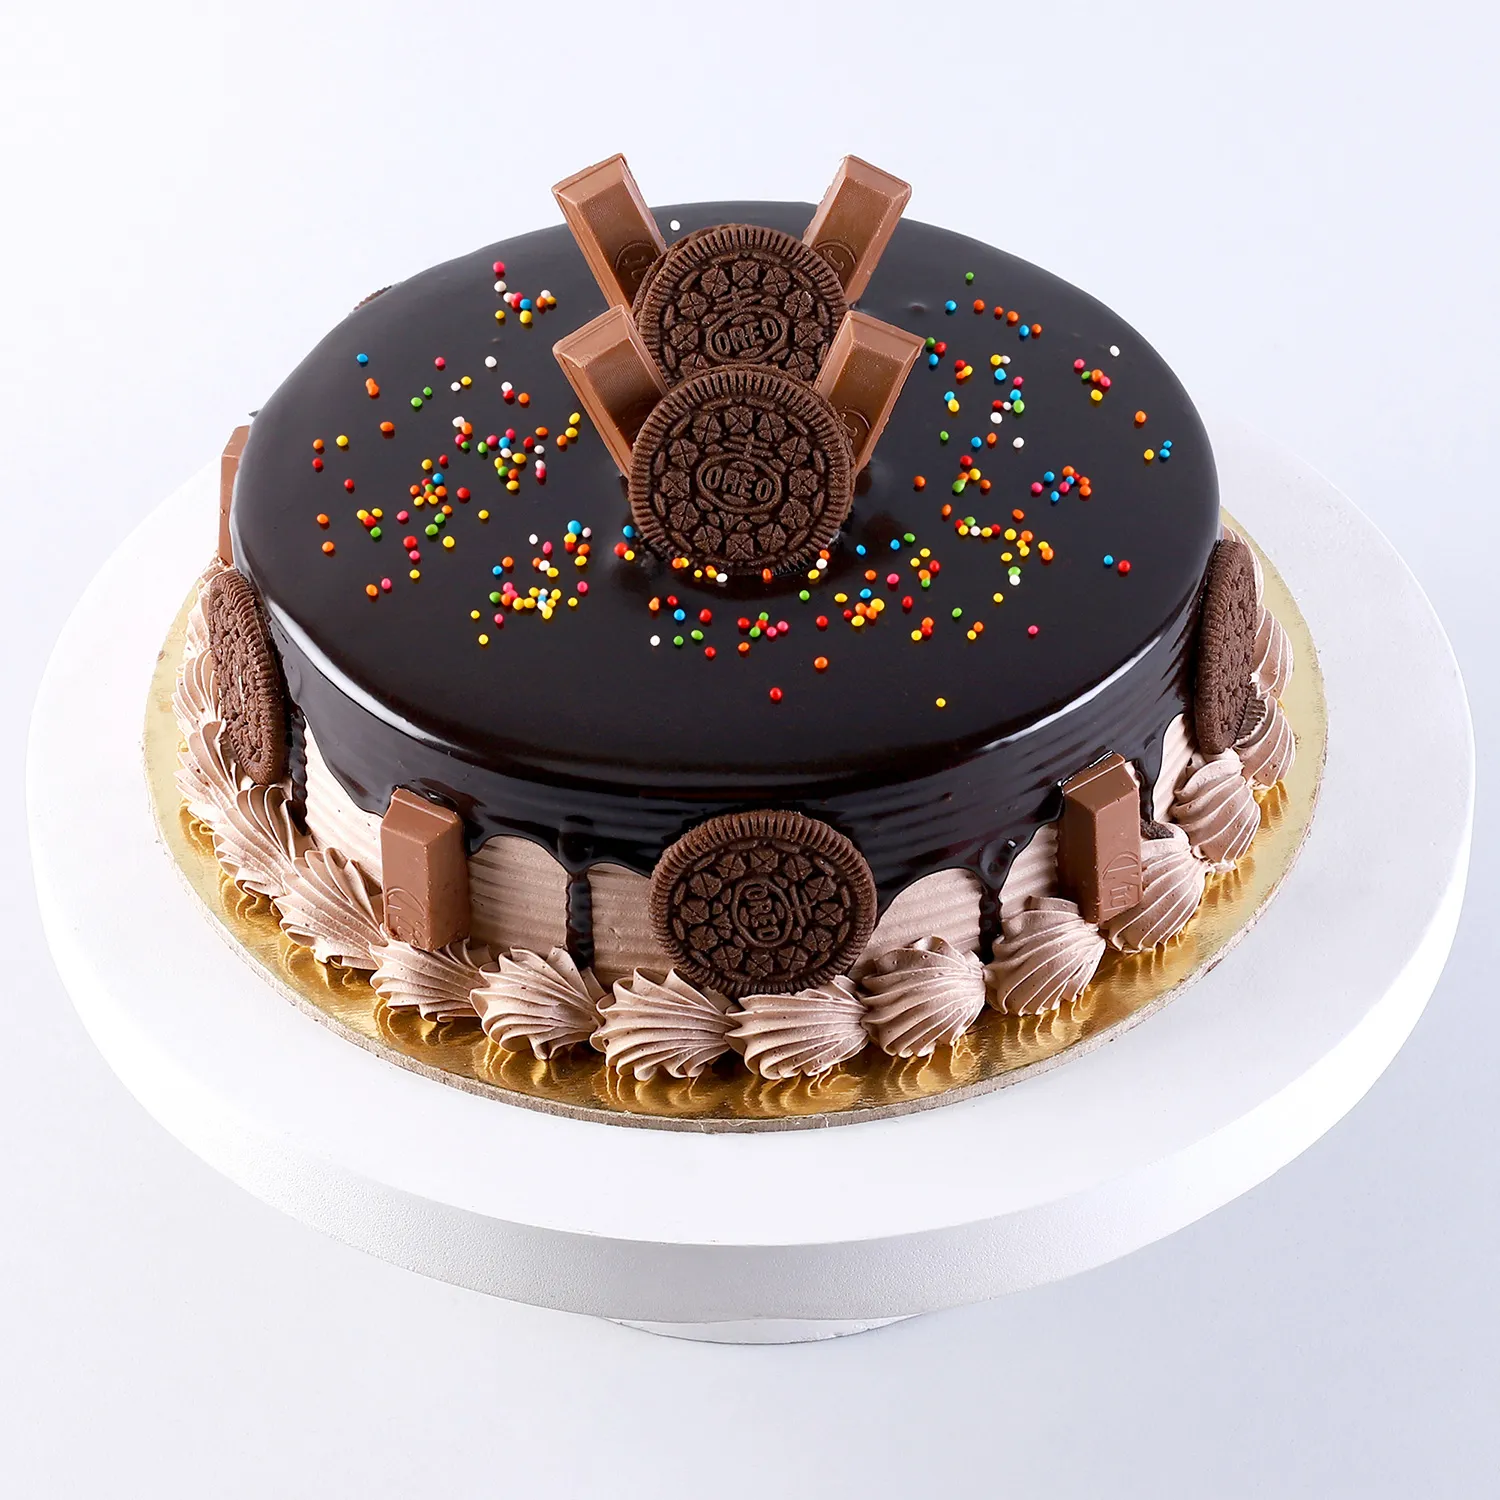 Best Sugarfree Eggless Chocolate Cake Mix |Diabetic Friendly